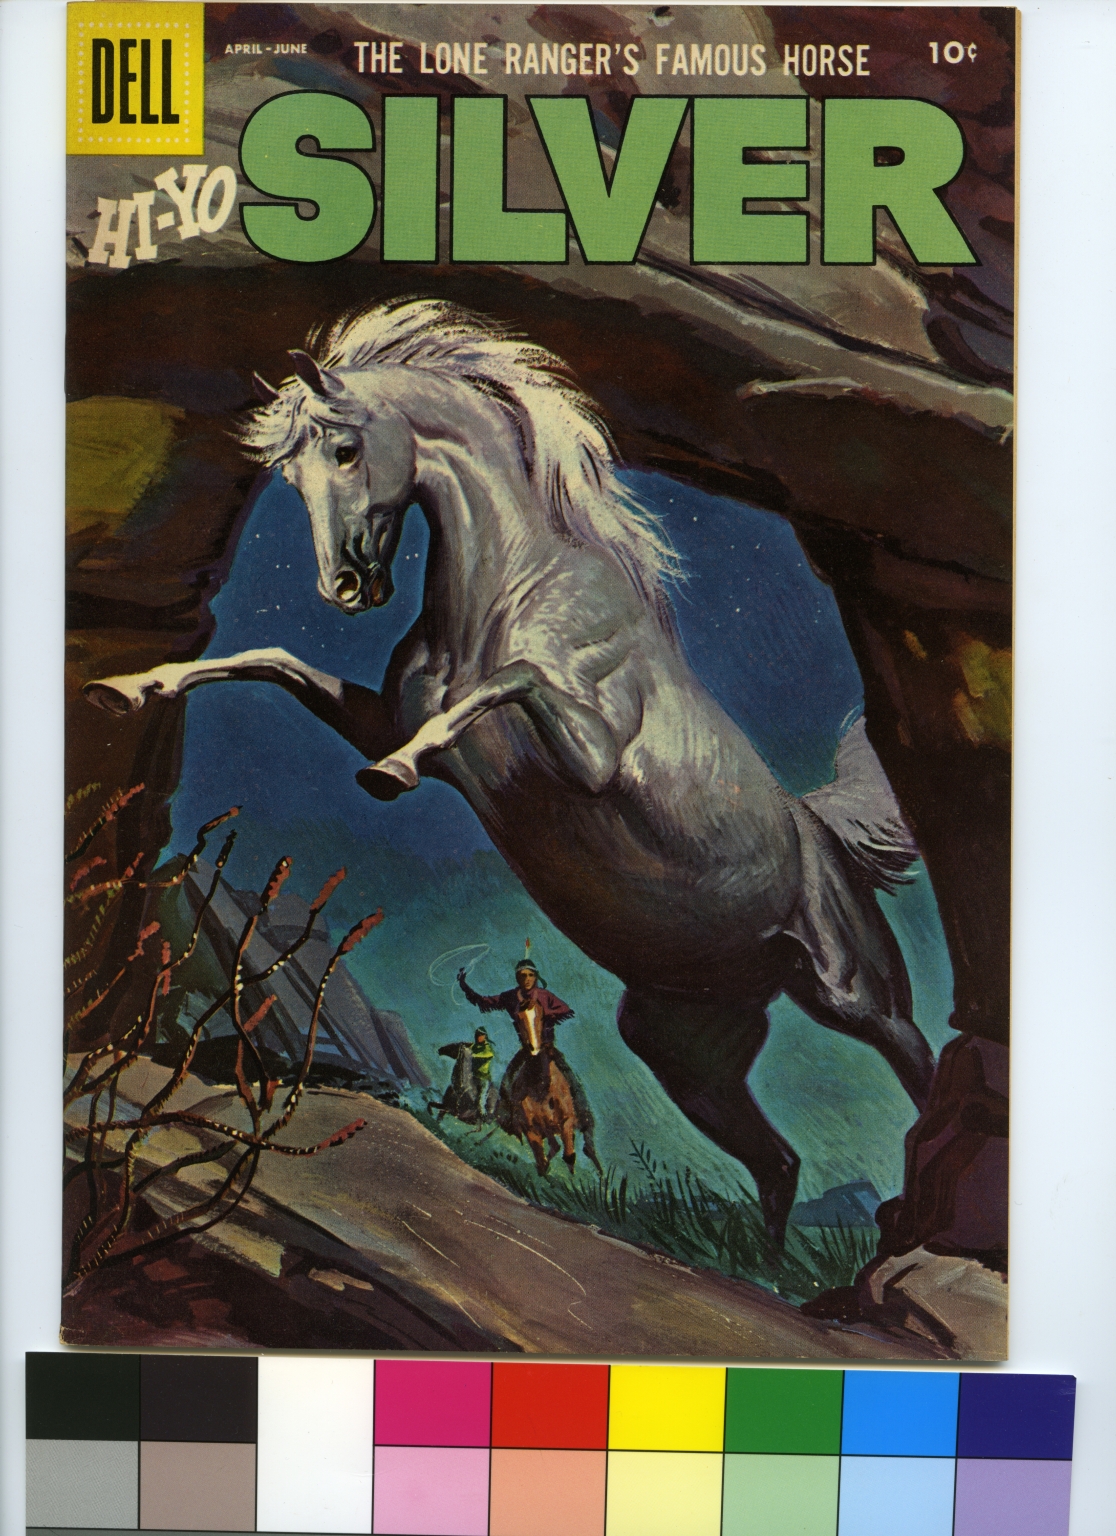 Lone Ranger's Famous Horse Hi-Yo Silver, The